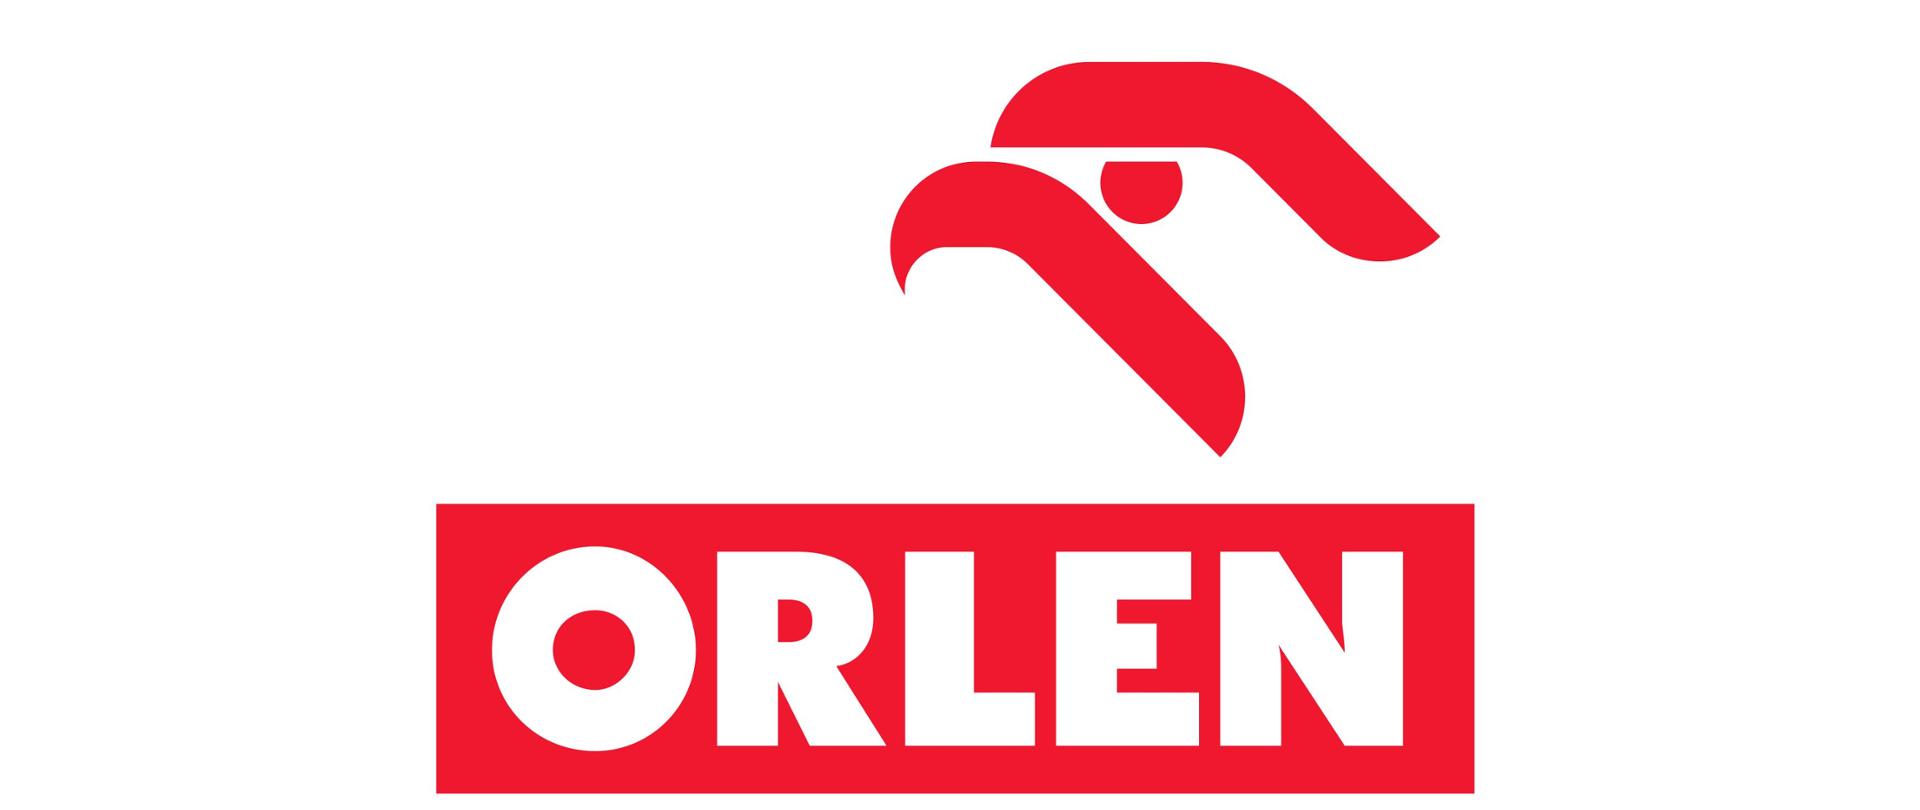 Fundacja Orlen logotyp